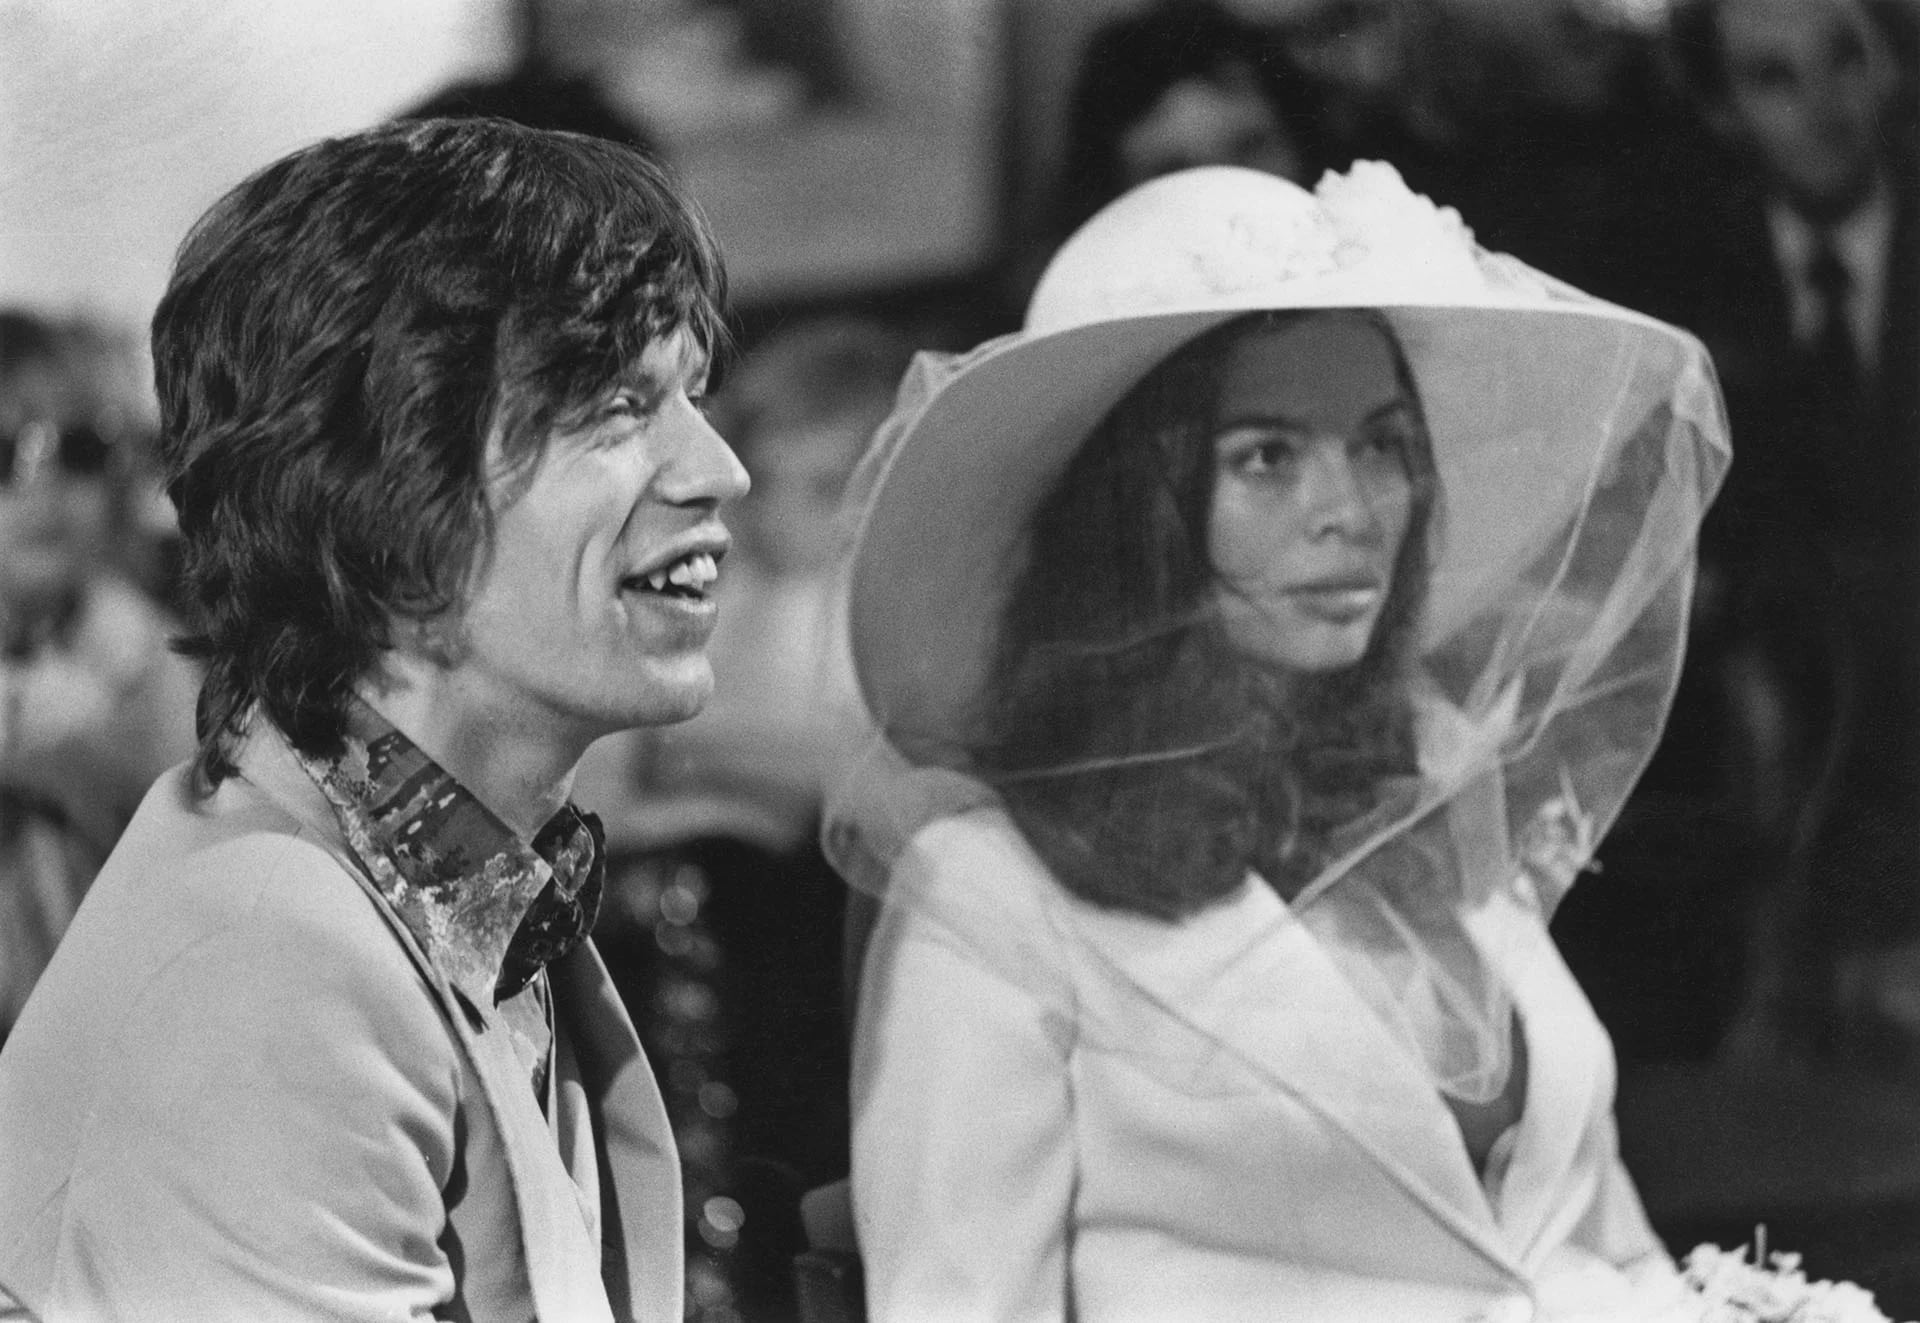 Mick se casó con Bianca Jagger en 1971
(Photo by Reg Lancaster/Daily Express/Hulton Archive/Getty Images)